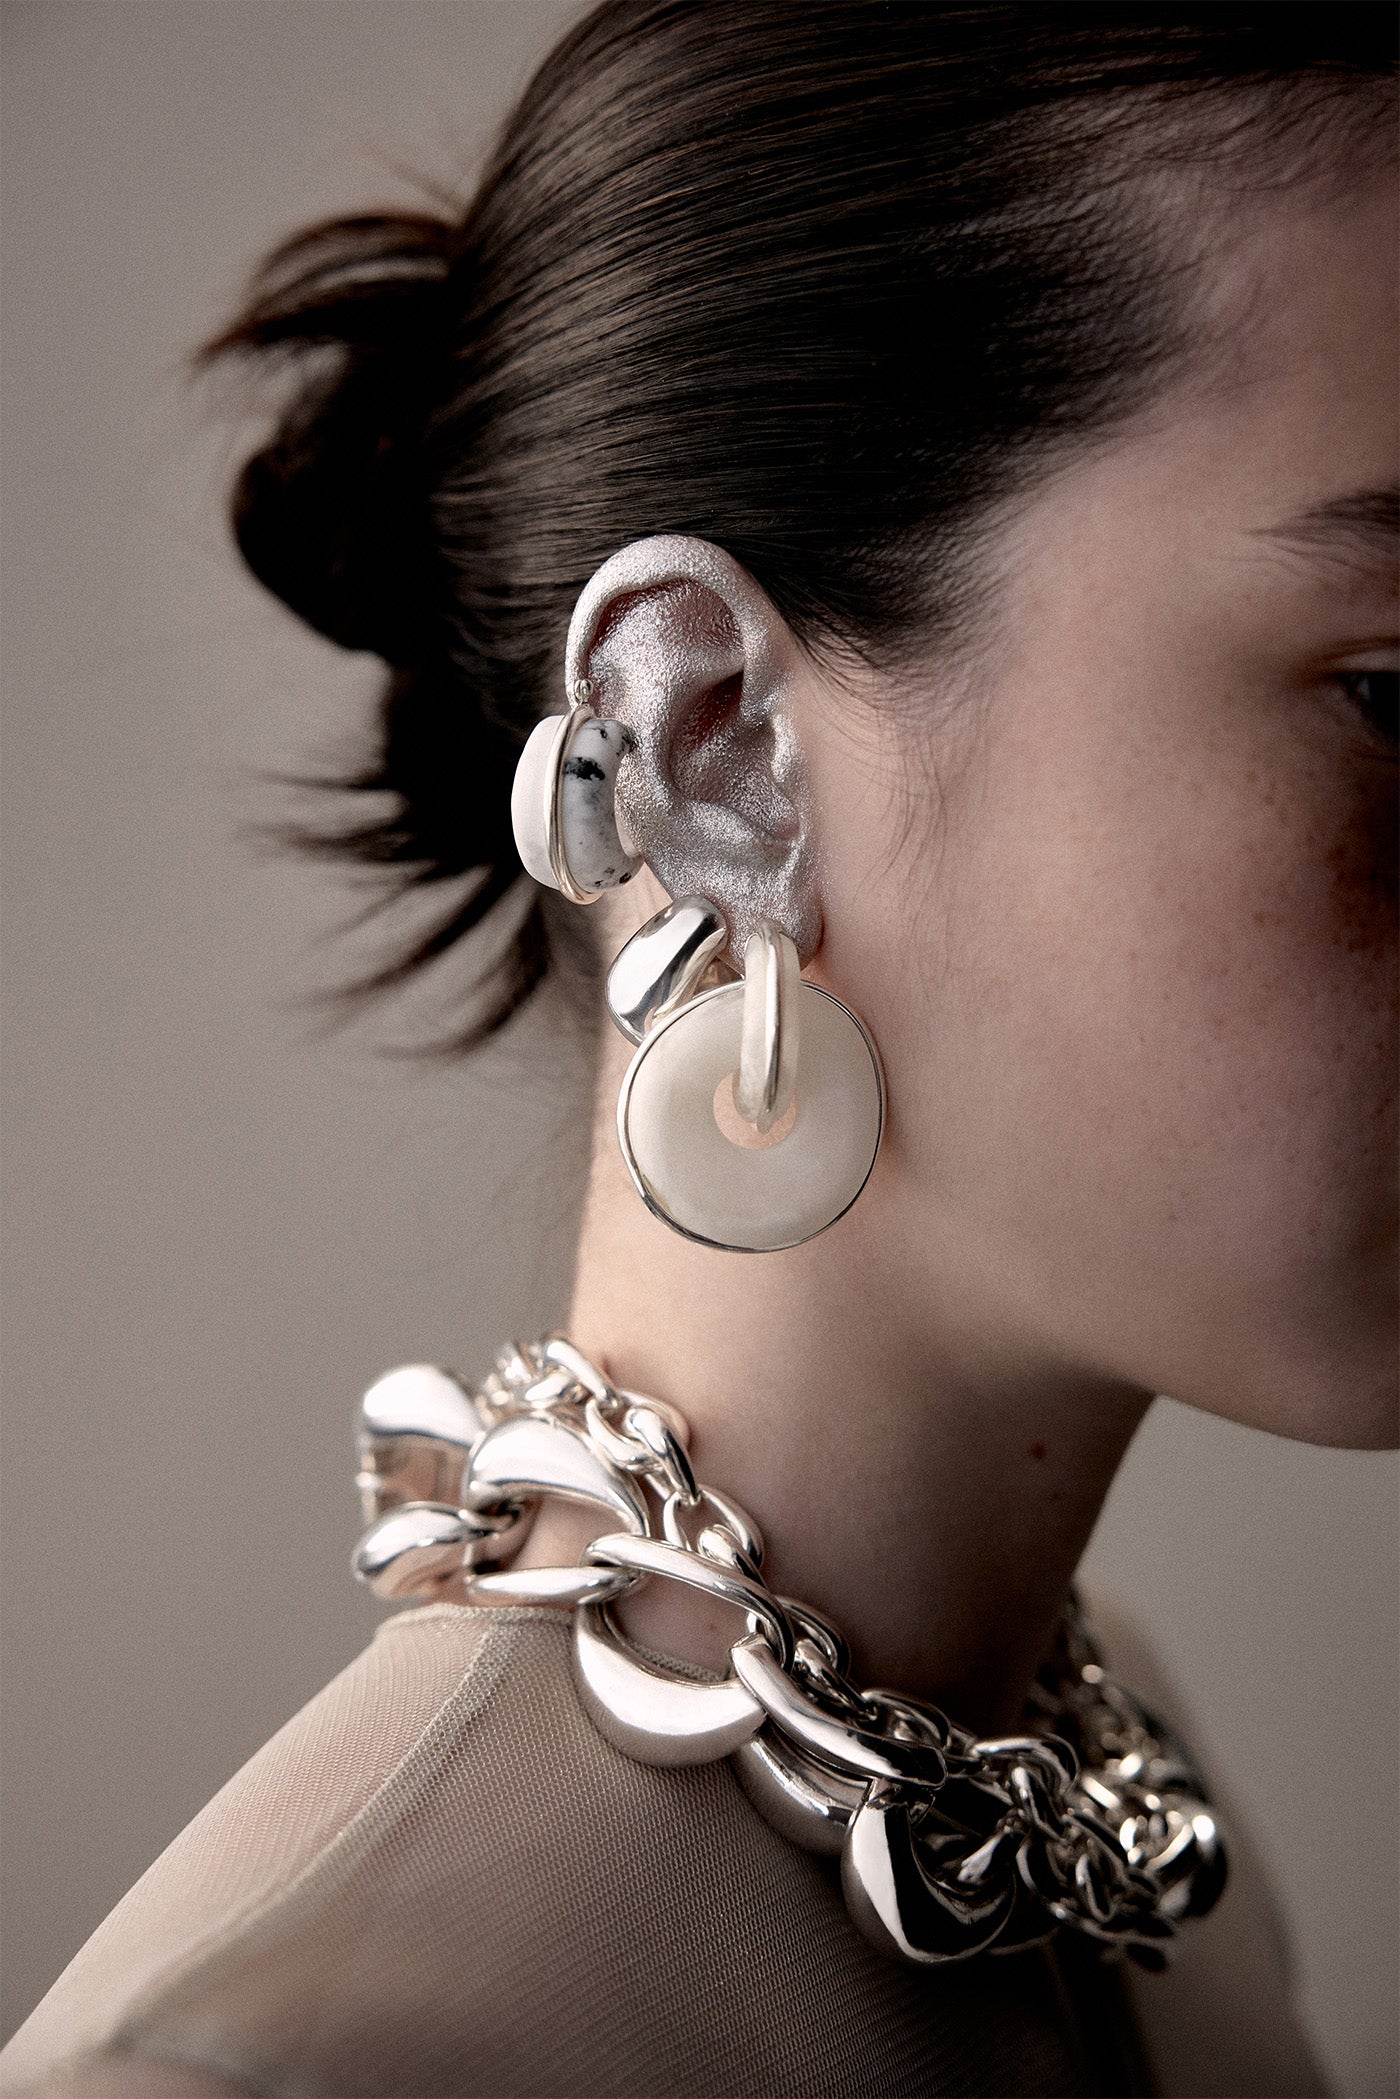 Daisy style earrings styled in a dragonfruit.